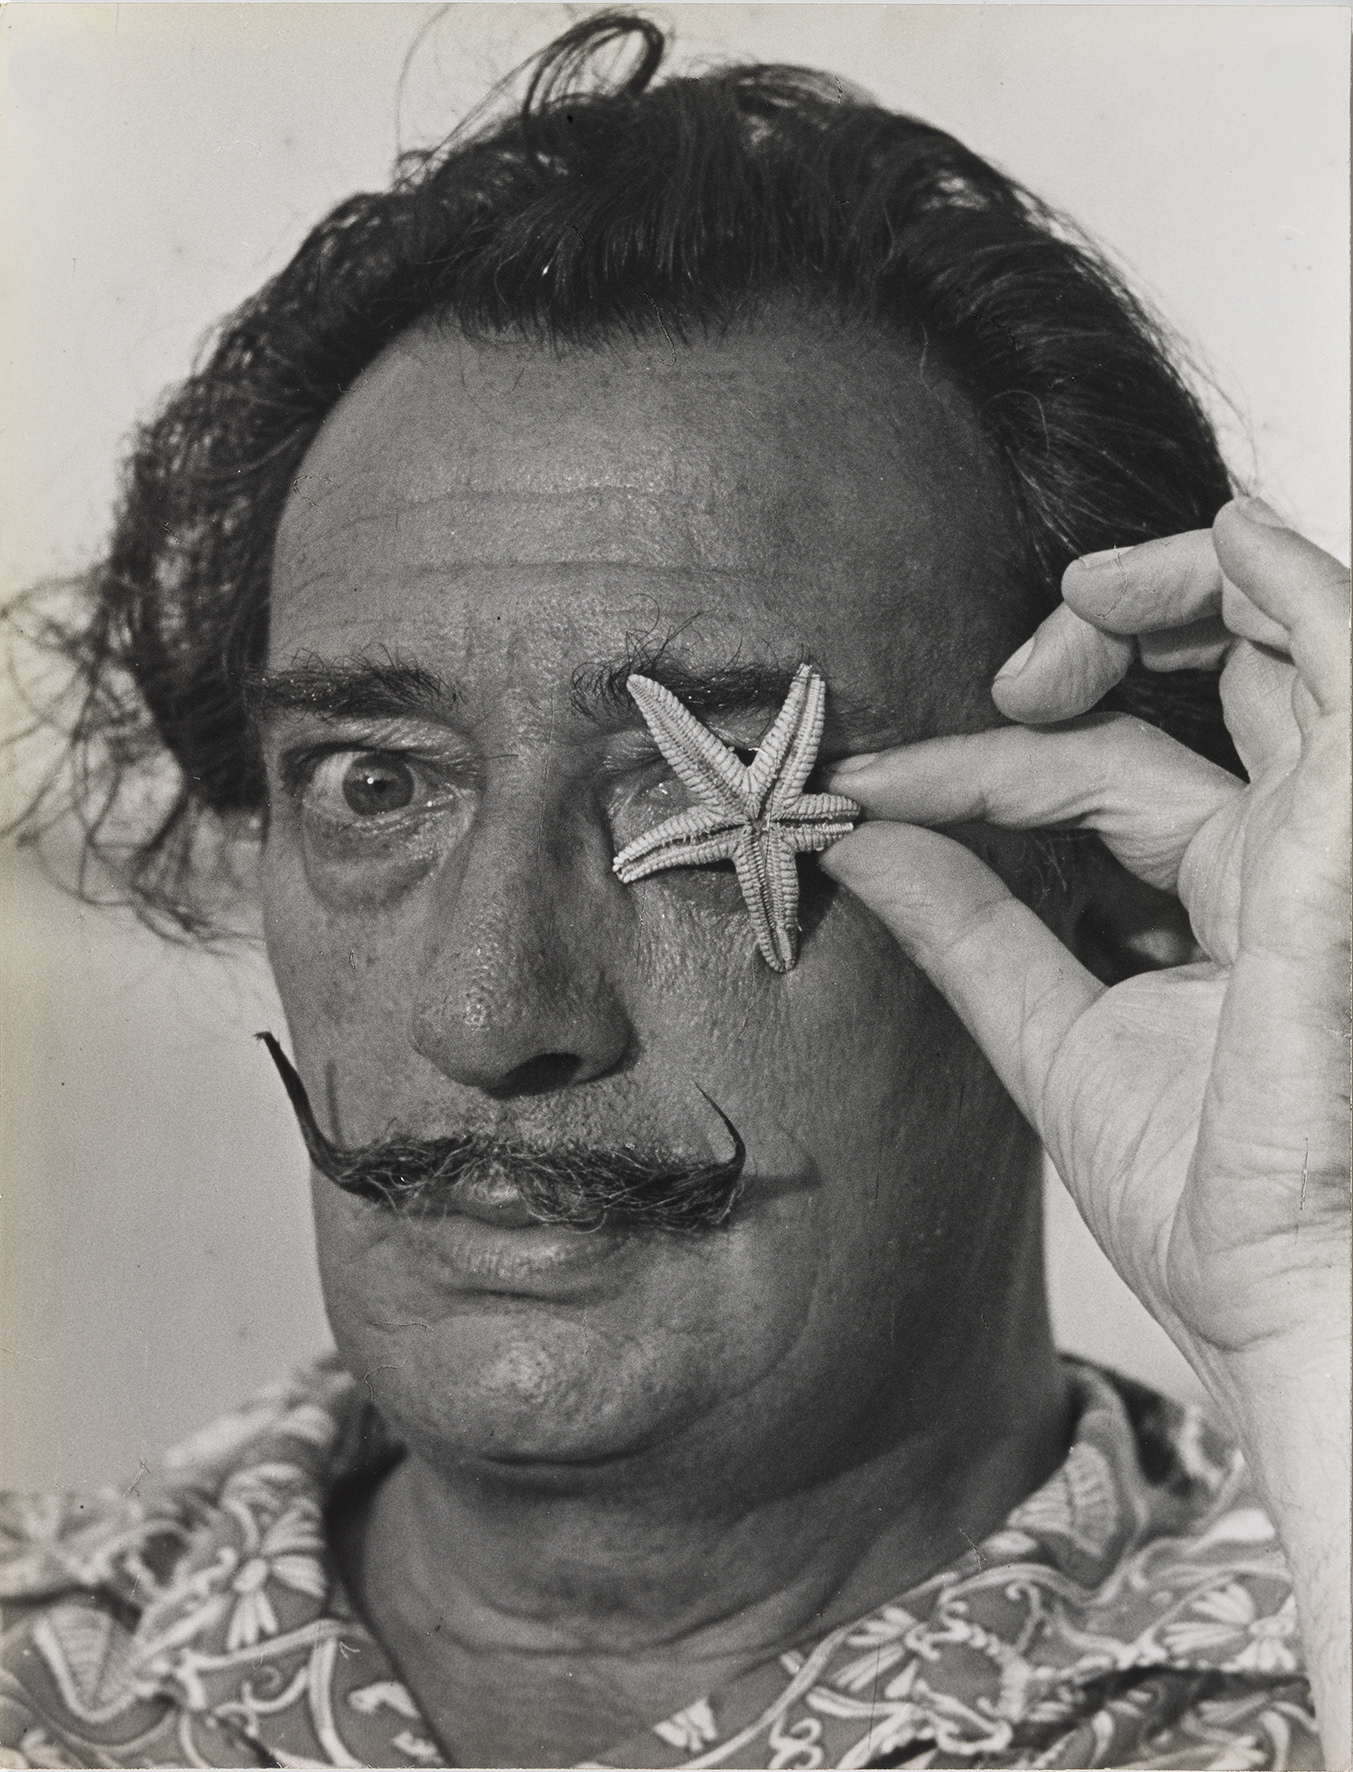 © X. Miserachs/Fundació Gala-Salvador Dalí, Figueres, 2016.